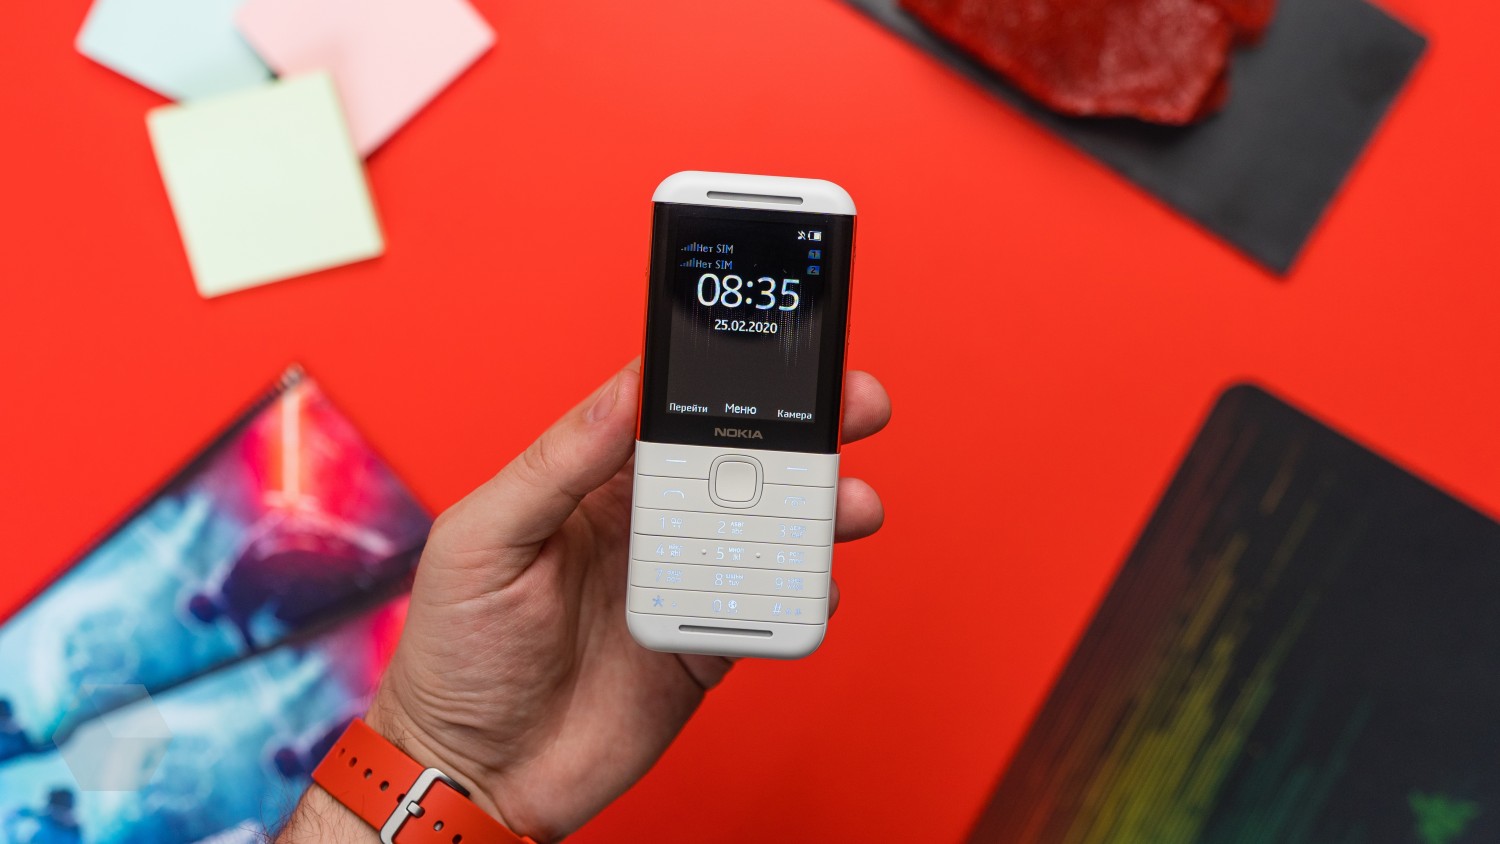 Обзор Nokia 5310: легенды не умирают